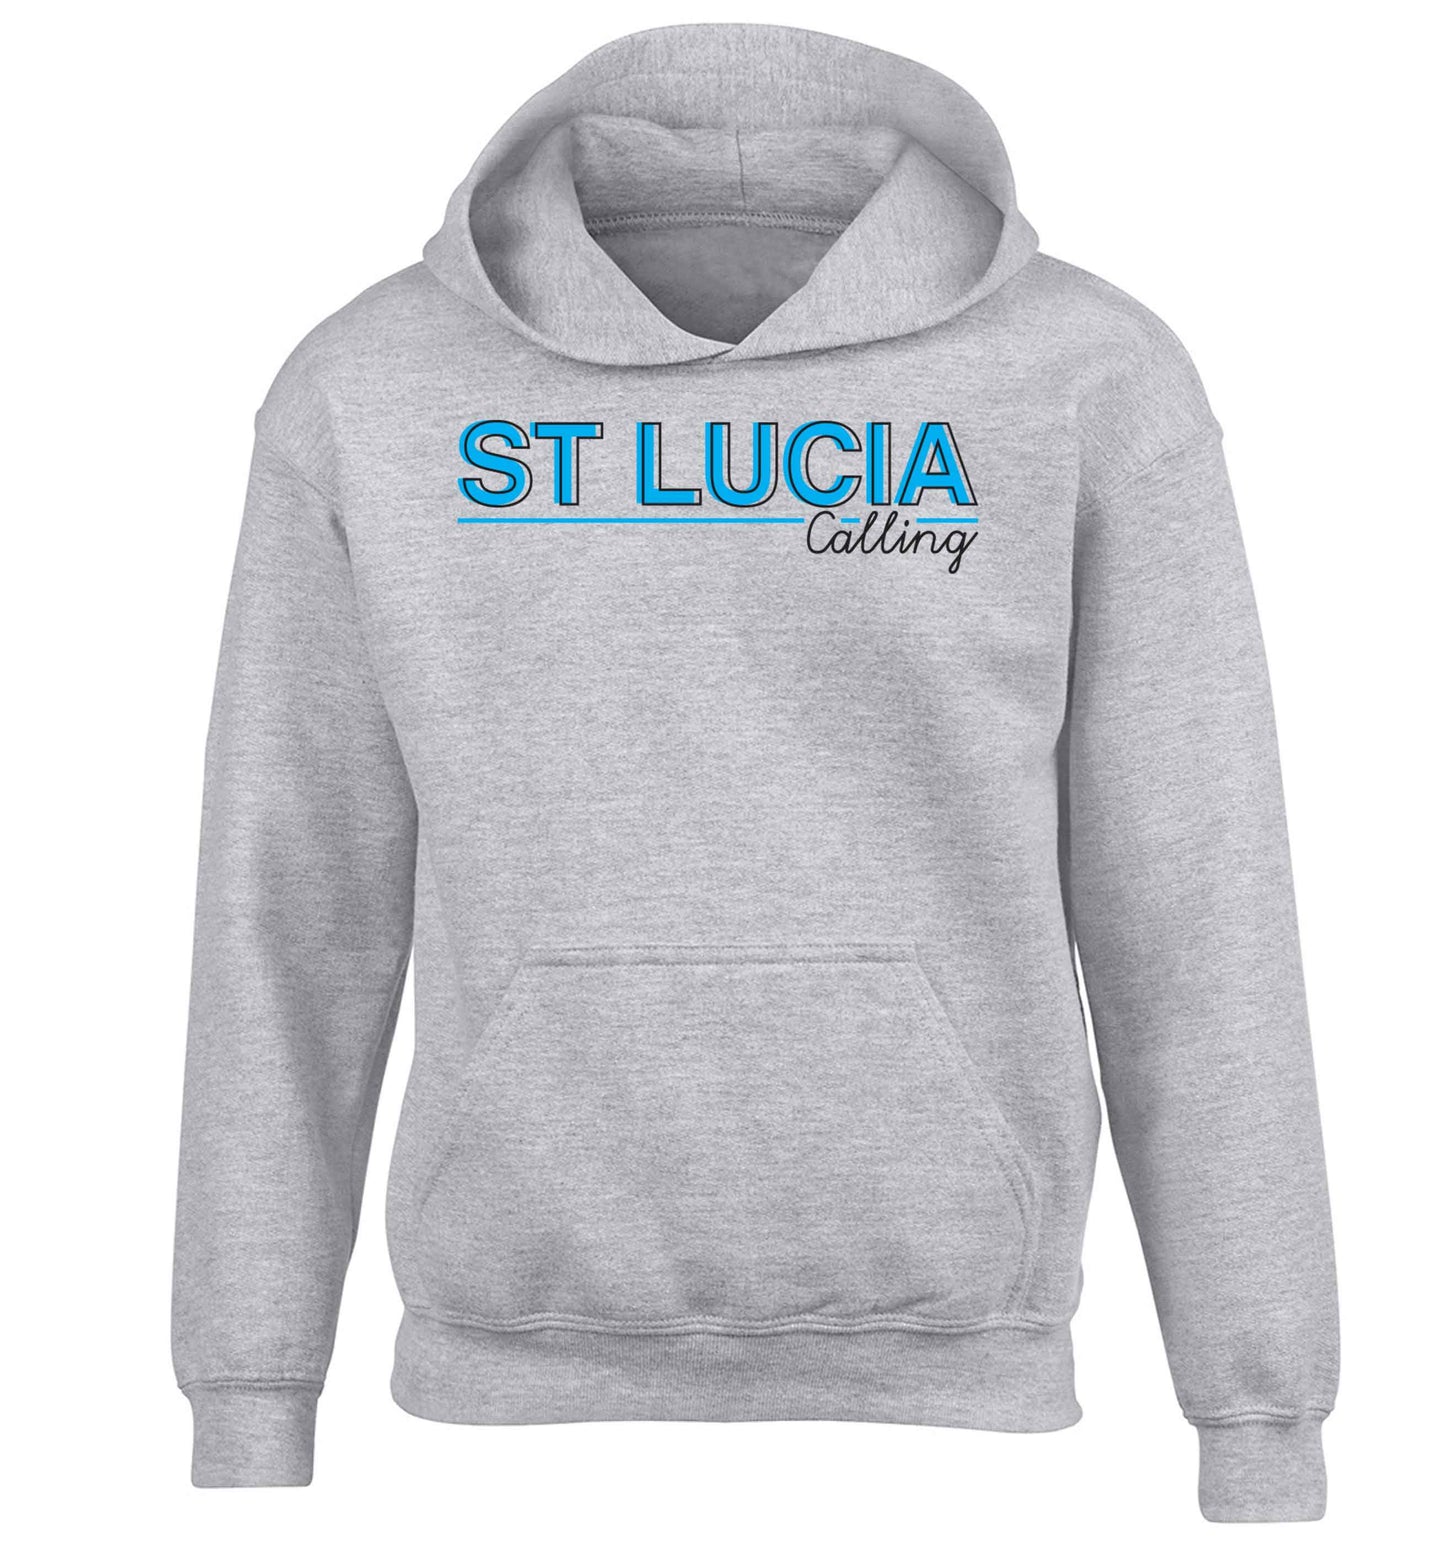 St Lucia calling children's grey hoodie 12-13 Years